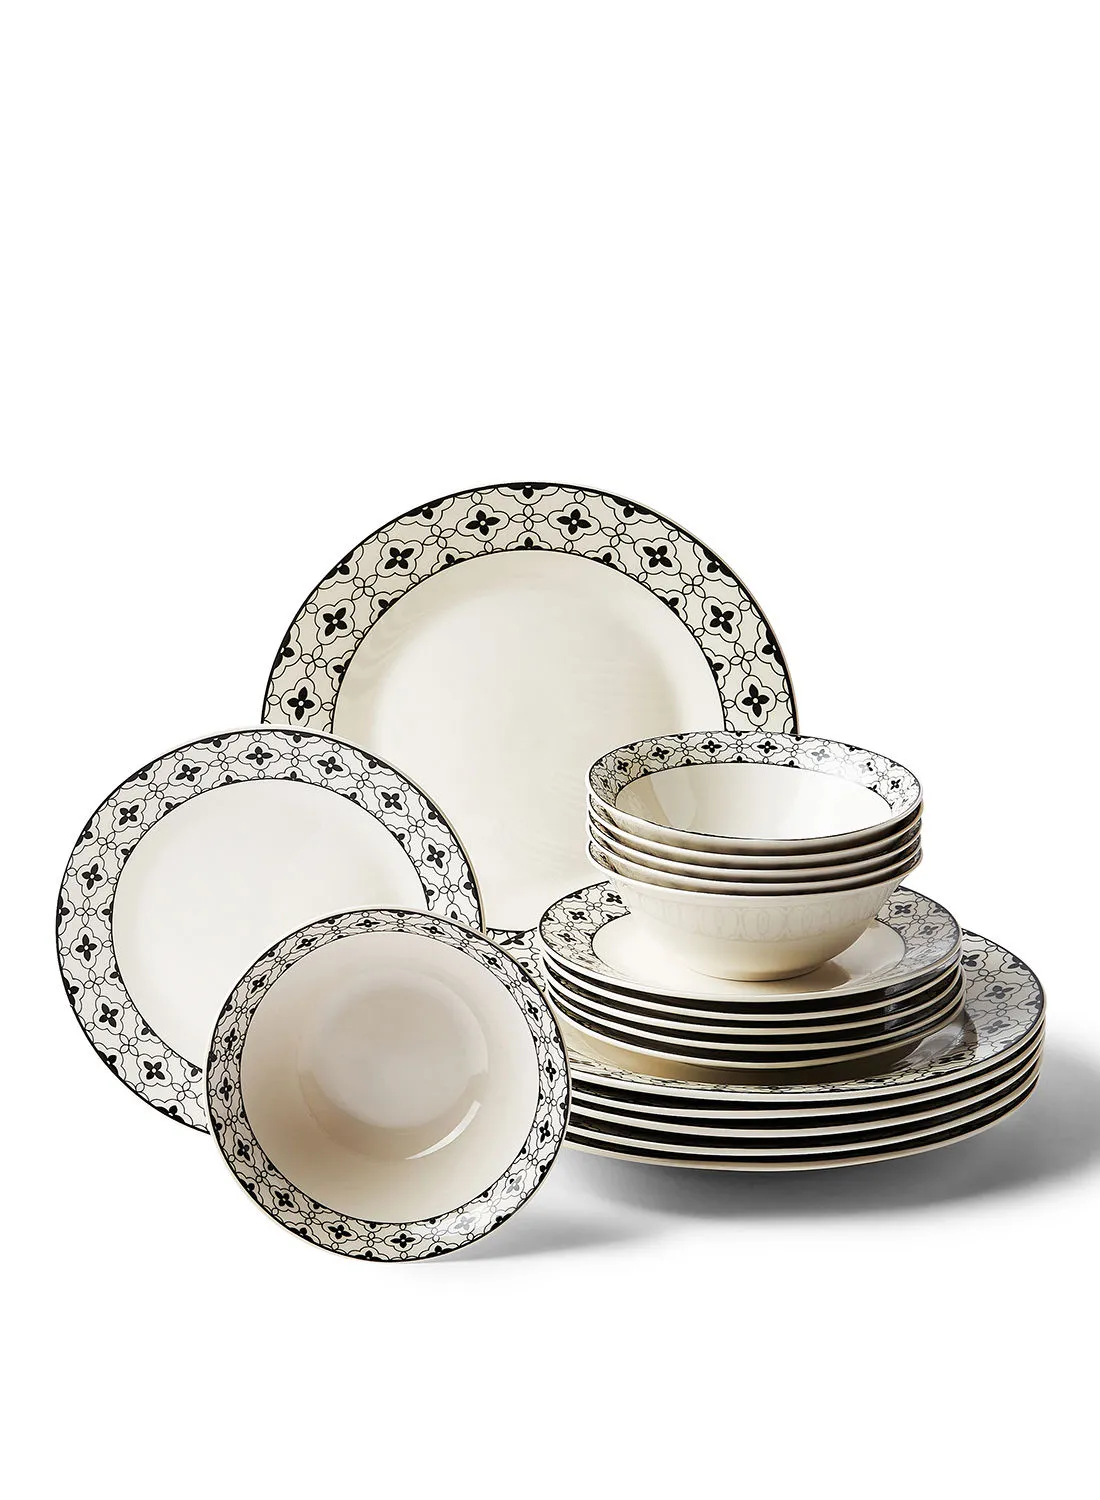 noon east 18 Piece Porcelain Dinner Set - Dishes, Plates - Dinner Plate, Side Plate, Bowl - Serves 6 - Printed Design Dalia